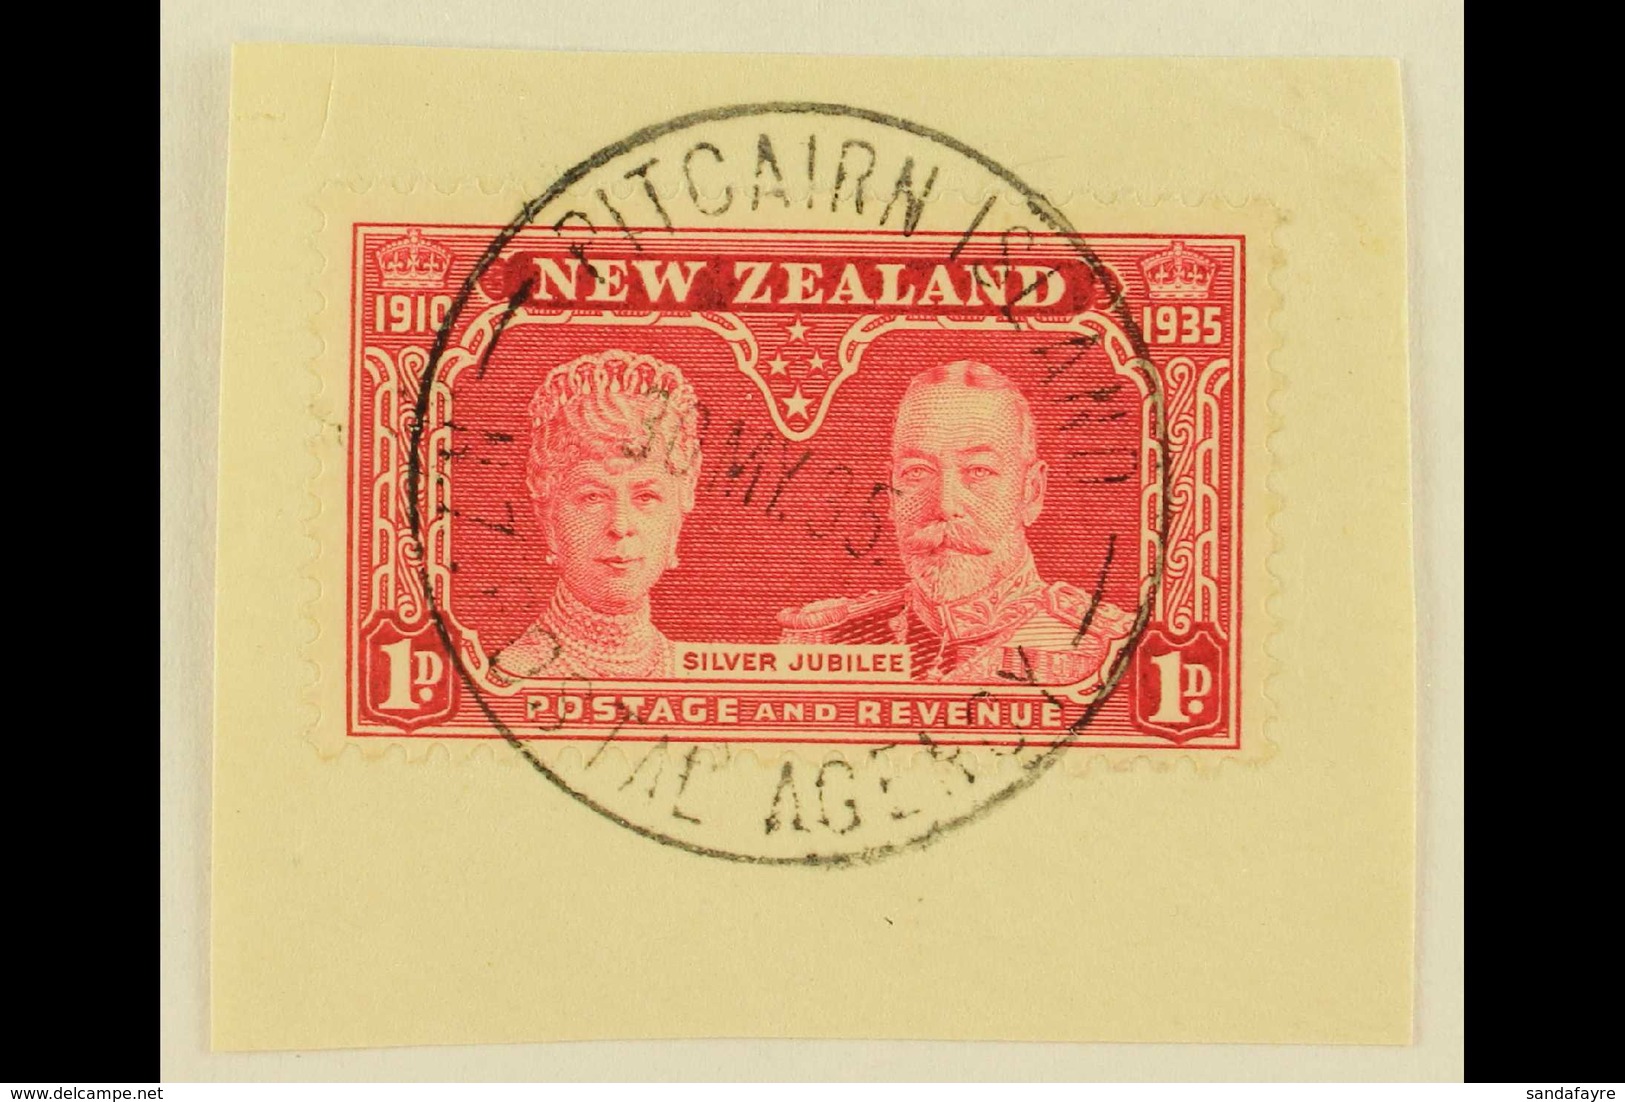 1935 1d Carmine Silver Jubilee Of New Zealand, On Piece Tied By Fine Full "PITCAIRN ISLANDS" Cds Cancel Of 30 MY 35, SG  - Pitcairninsel